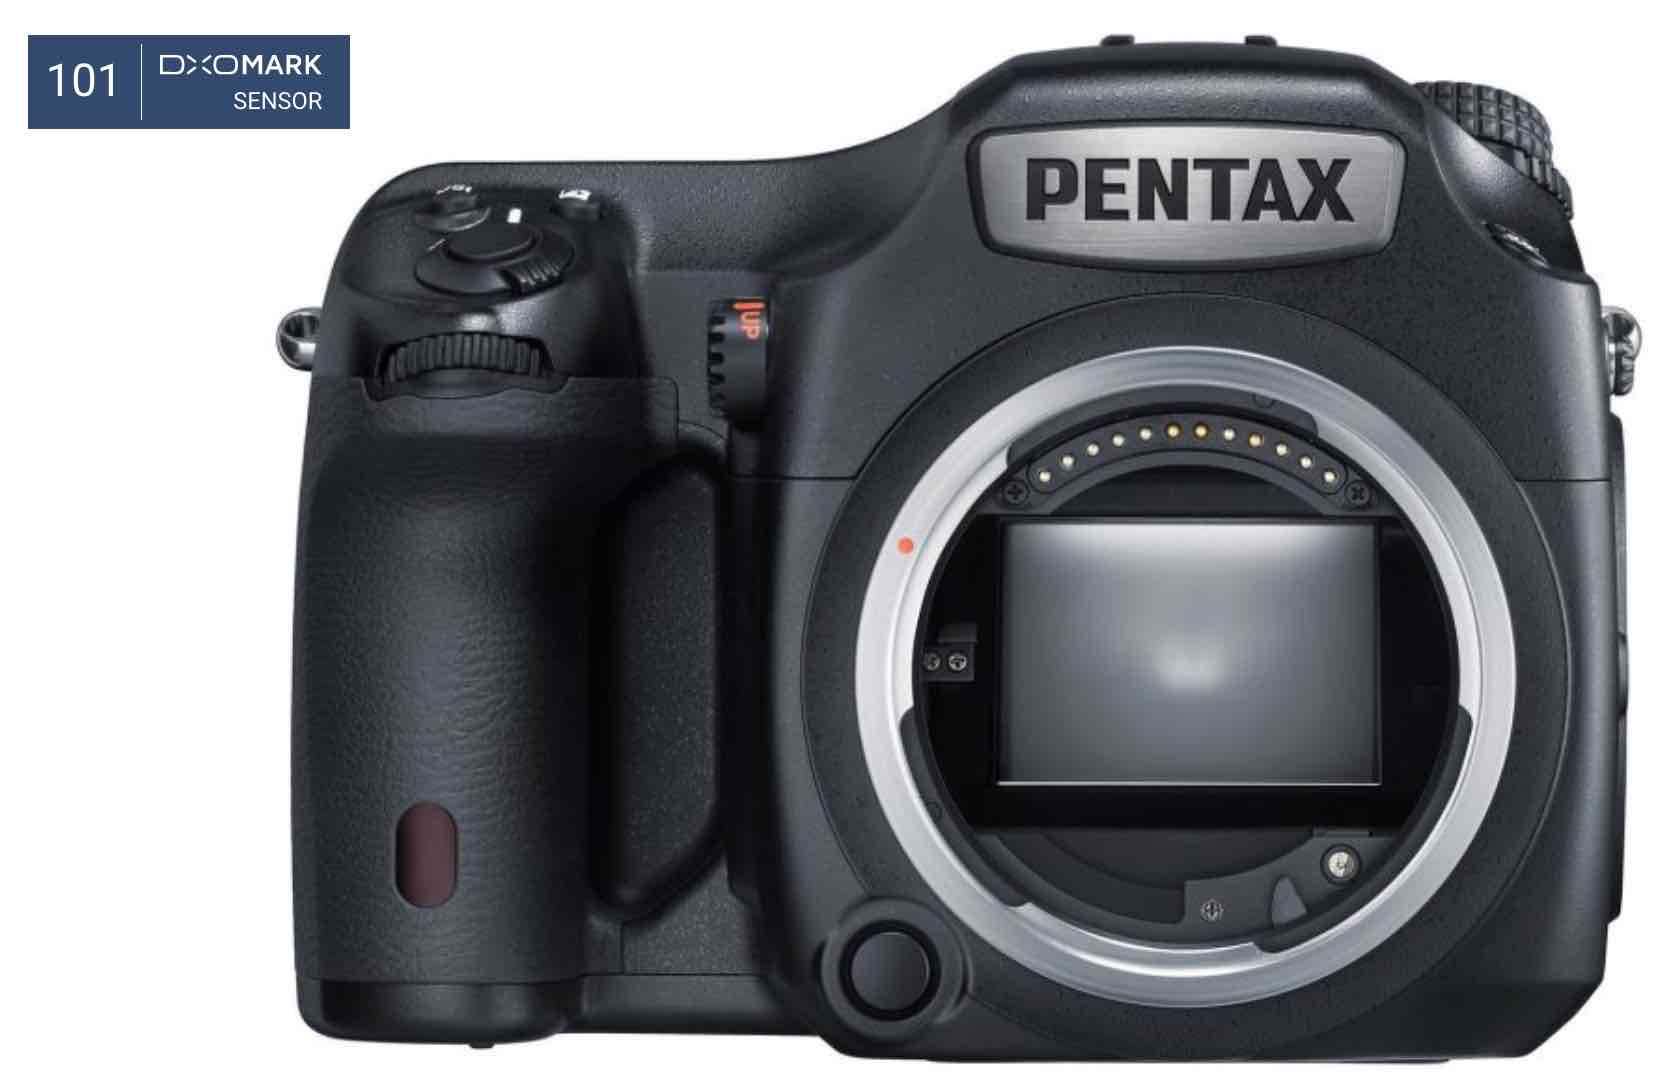 Amazon Jungle Vergelijken draaipunt Pentax 645Z Second Best Sensor Ever Tested after Hasselblad X1D... Fujifilm  GFX 50S Test Coming Soon? - Fuji Rumors